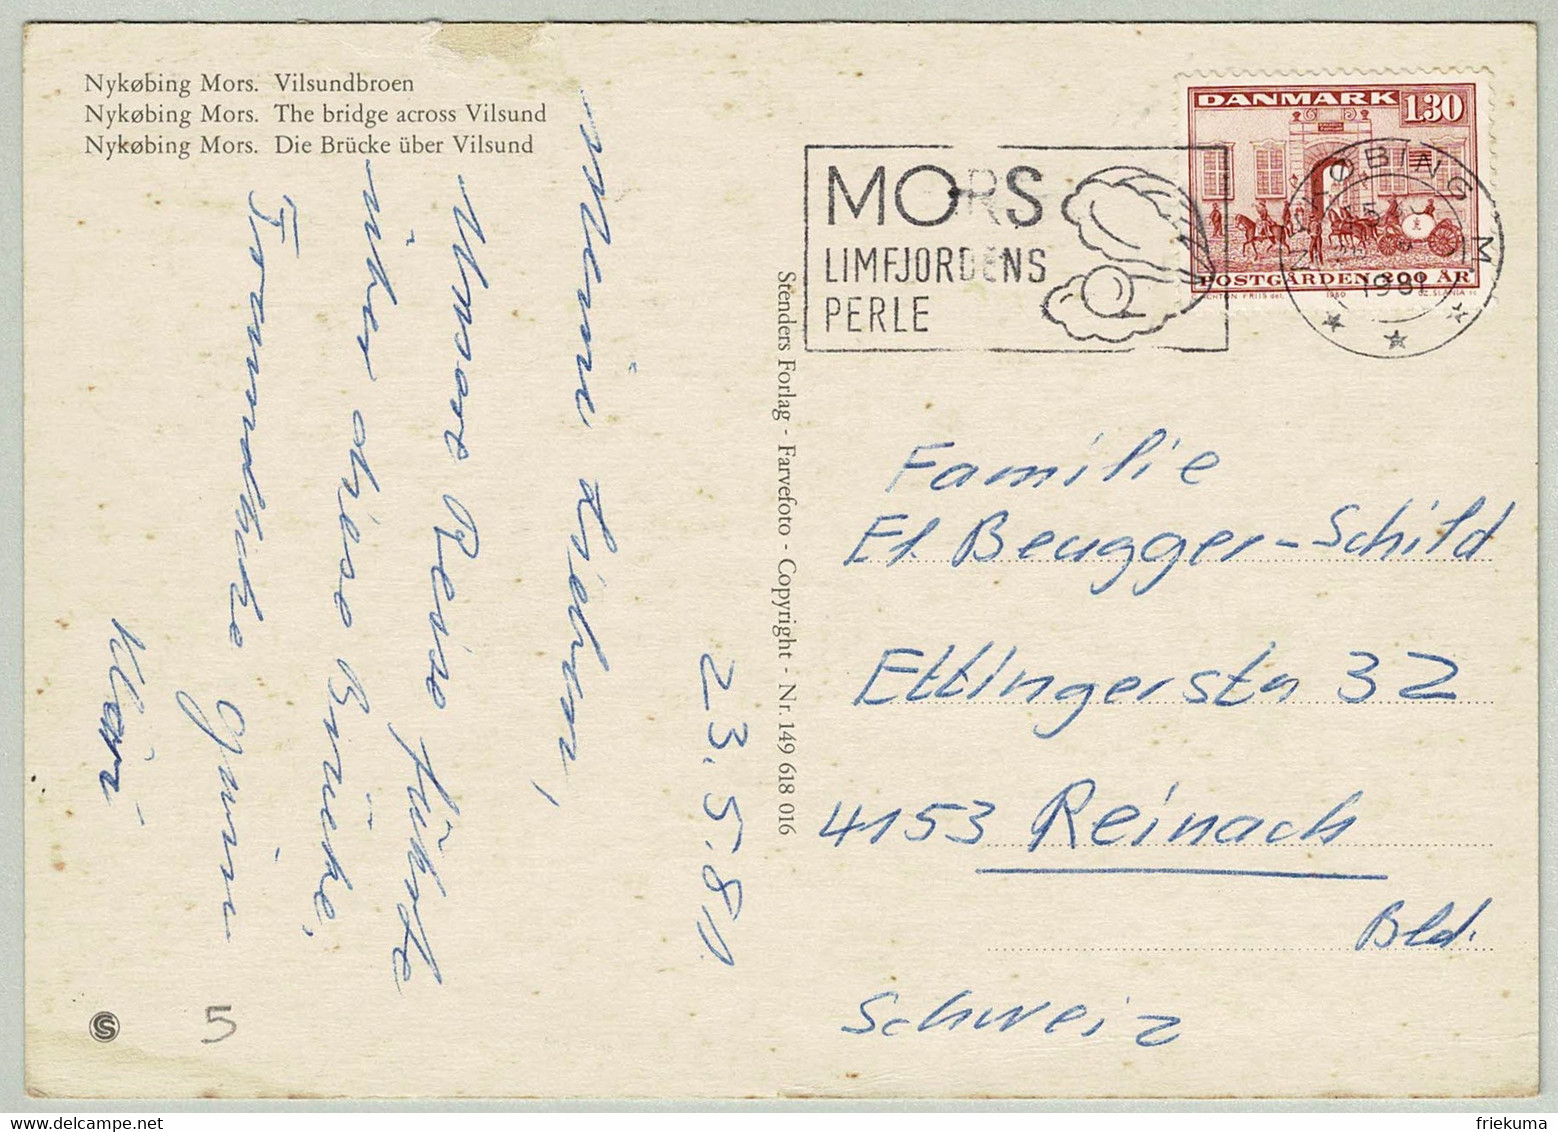 Dänemark / Danmark 1981, Postkarte Nykobing Mors - Reinach (Schweiz), Insel / Ile / Island, Perle / Pearl - Iles